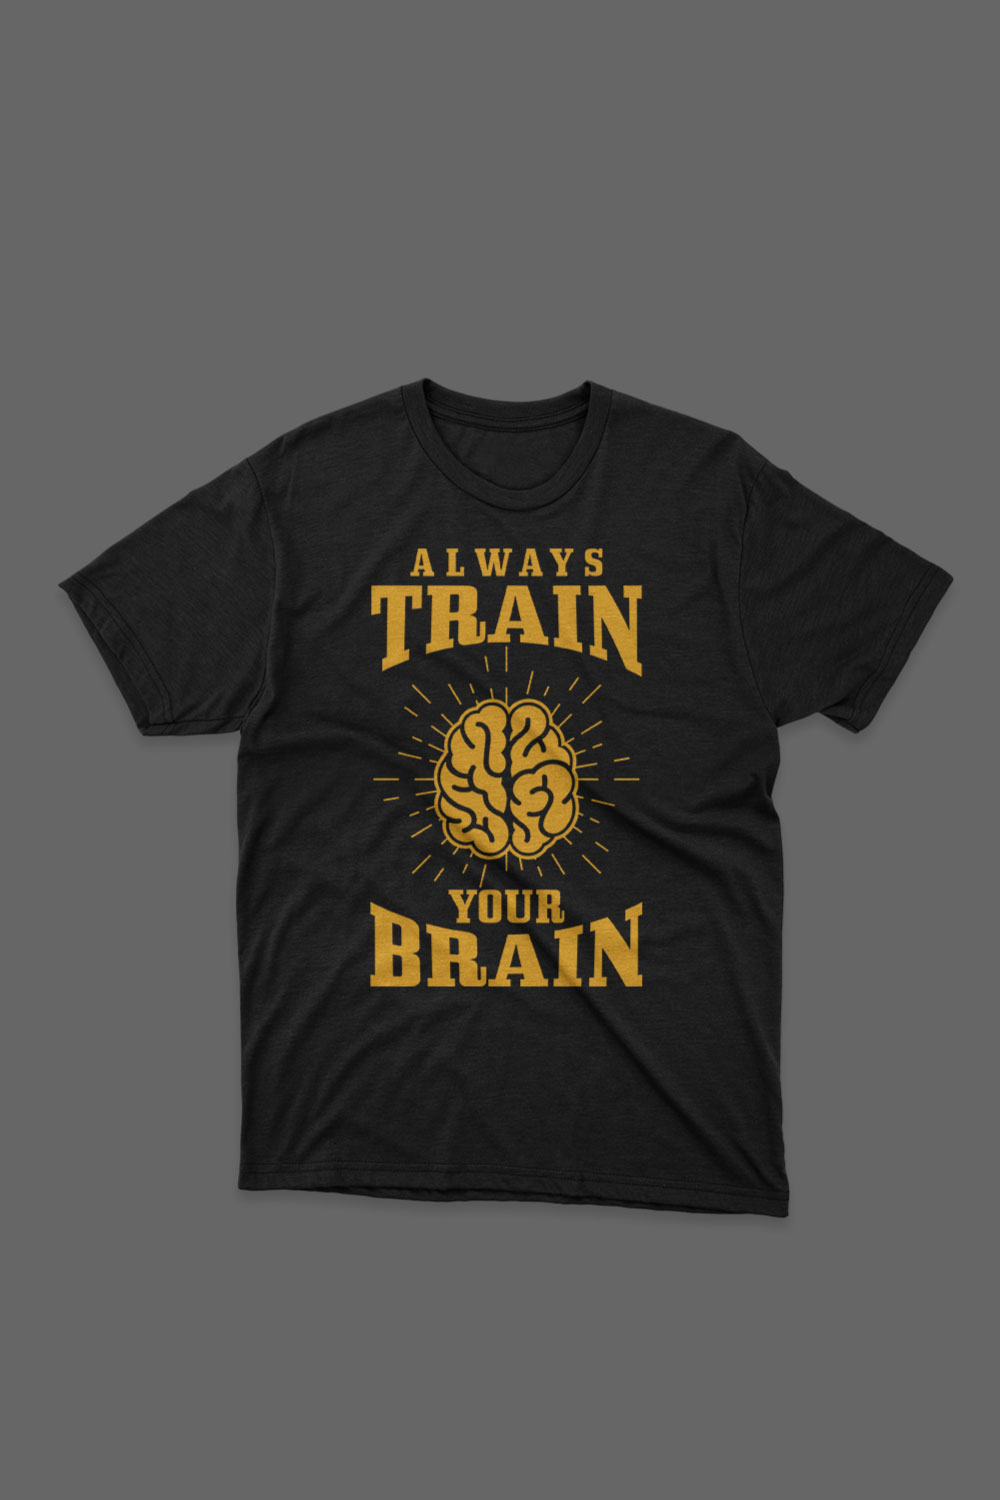 Always Train Your Brain T Shirt Design pinterest preview image.